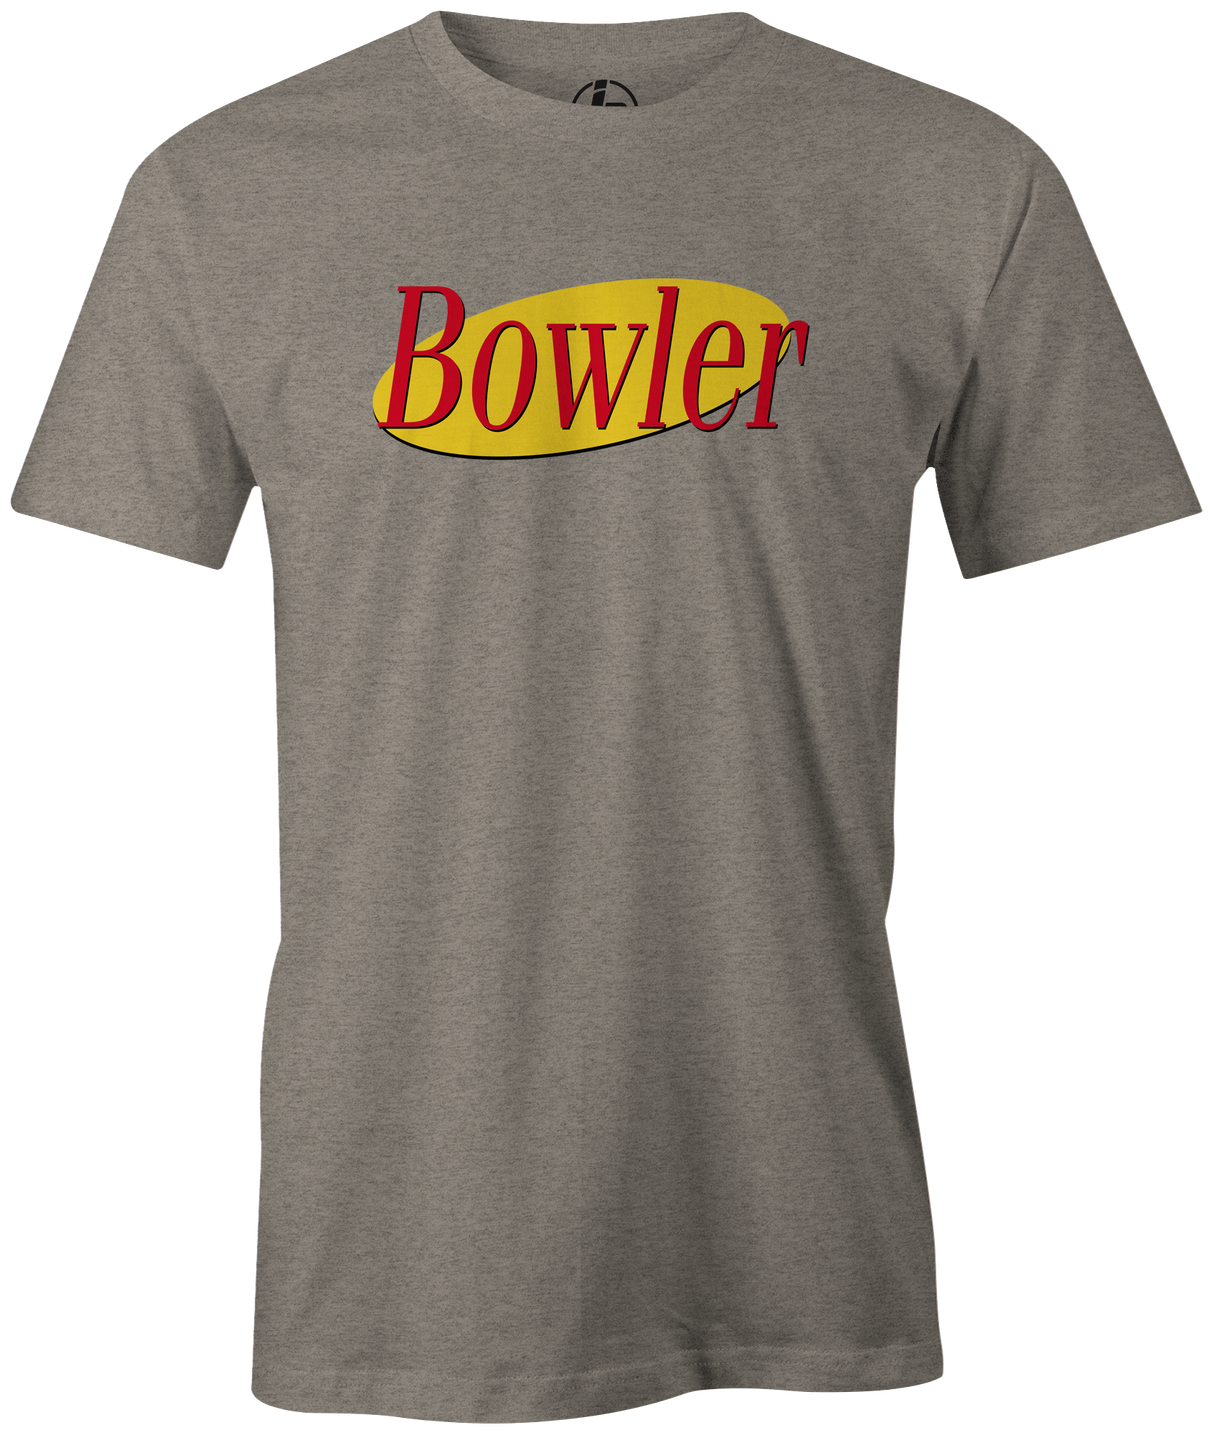 Bowler Men's T-Shirt, Gray, bowling, funny, cool, vintage, novelty, television, tv show, tee, t shirt, t-shirt, tees, t,, Seinfeld,, league bowling team shirt, tournament shirtt